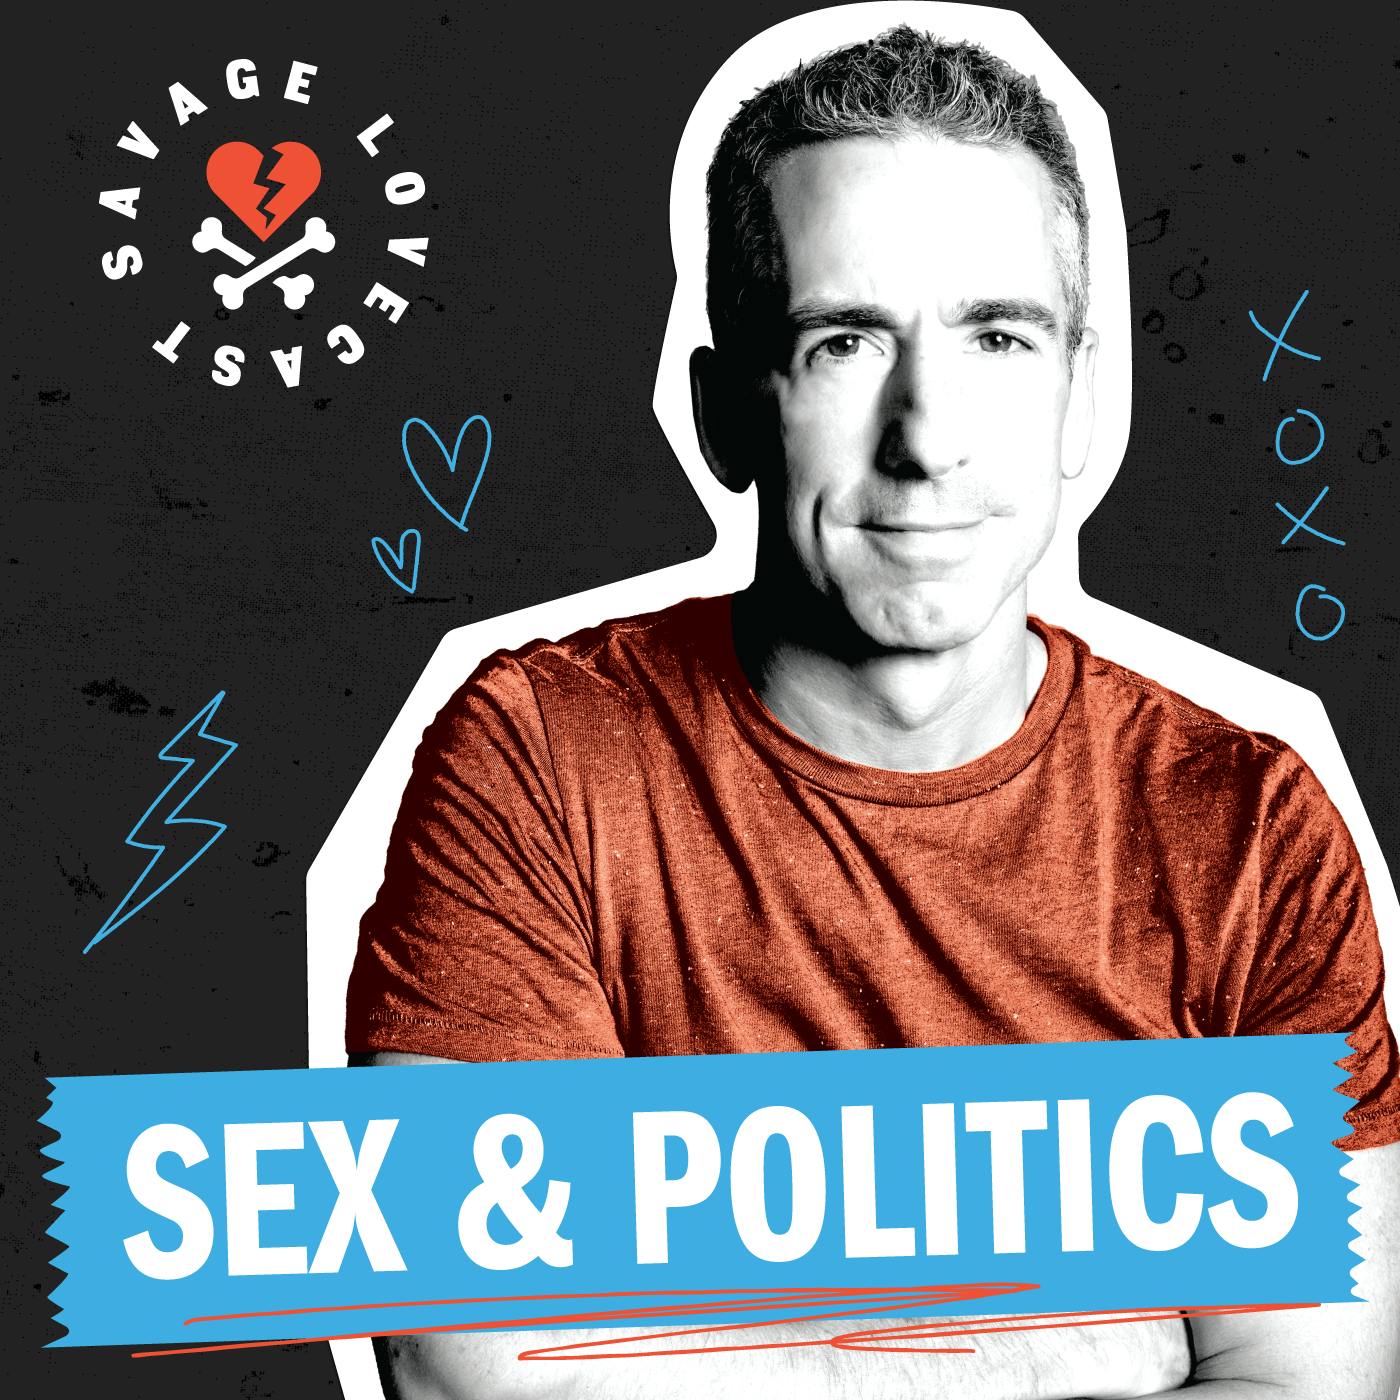 Sex & Politics #29: Micro version